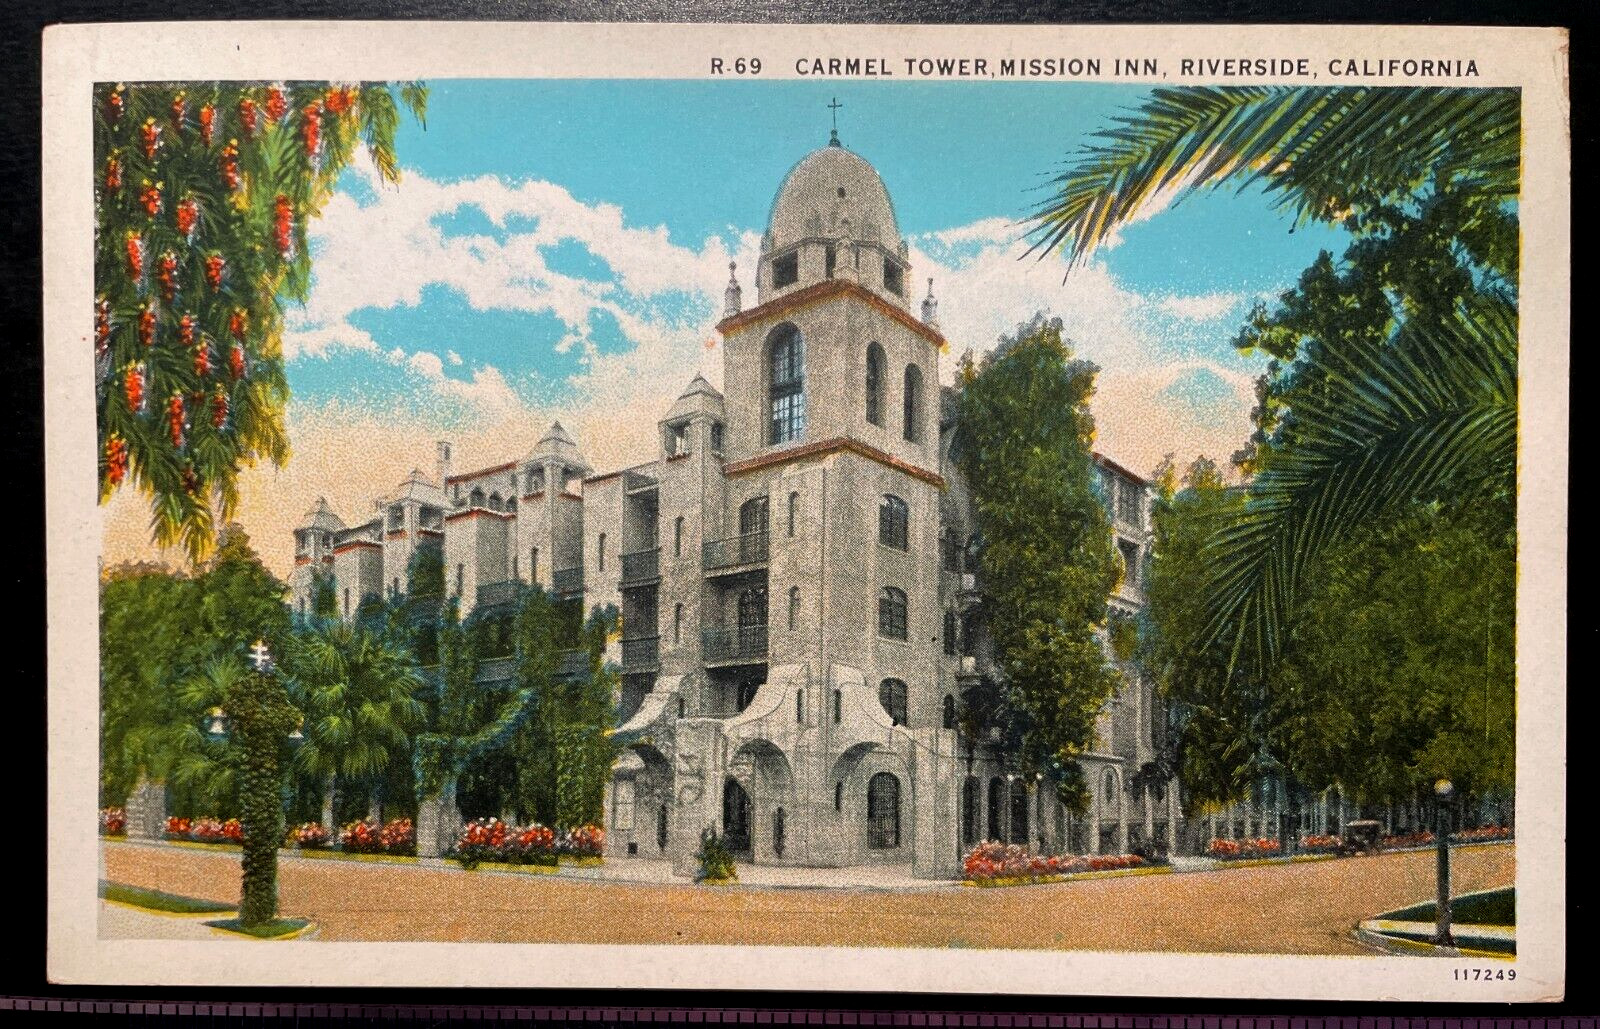 Vintage Postcard 1927 Mission Inn, Carmel Tower, Riverside, California (CA)